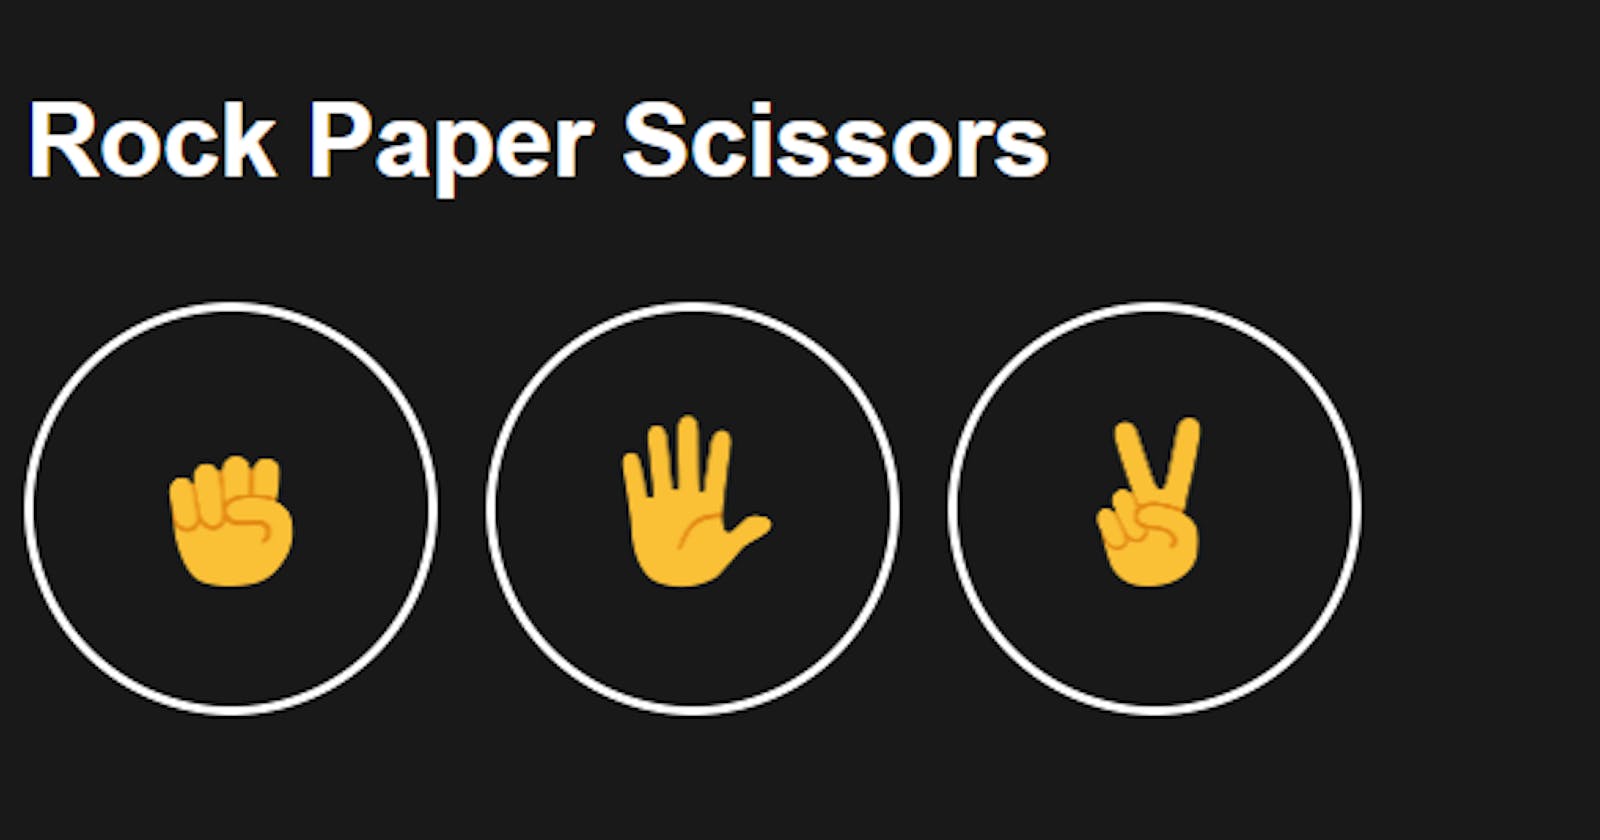 " Rock, Paper, Scissors game"